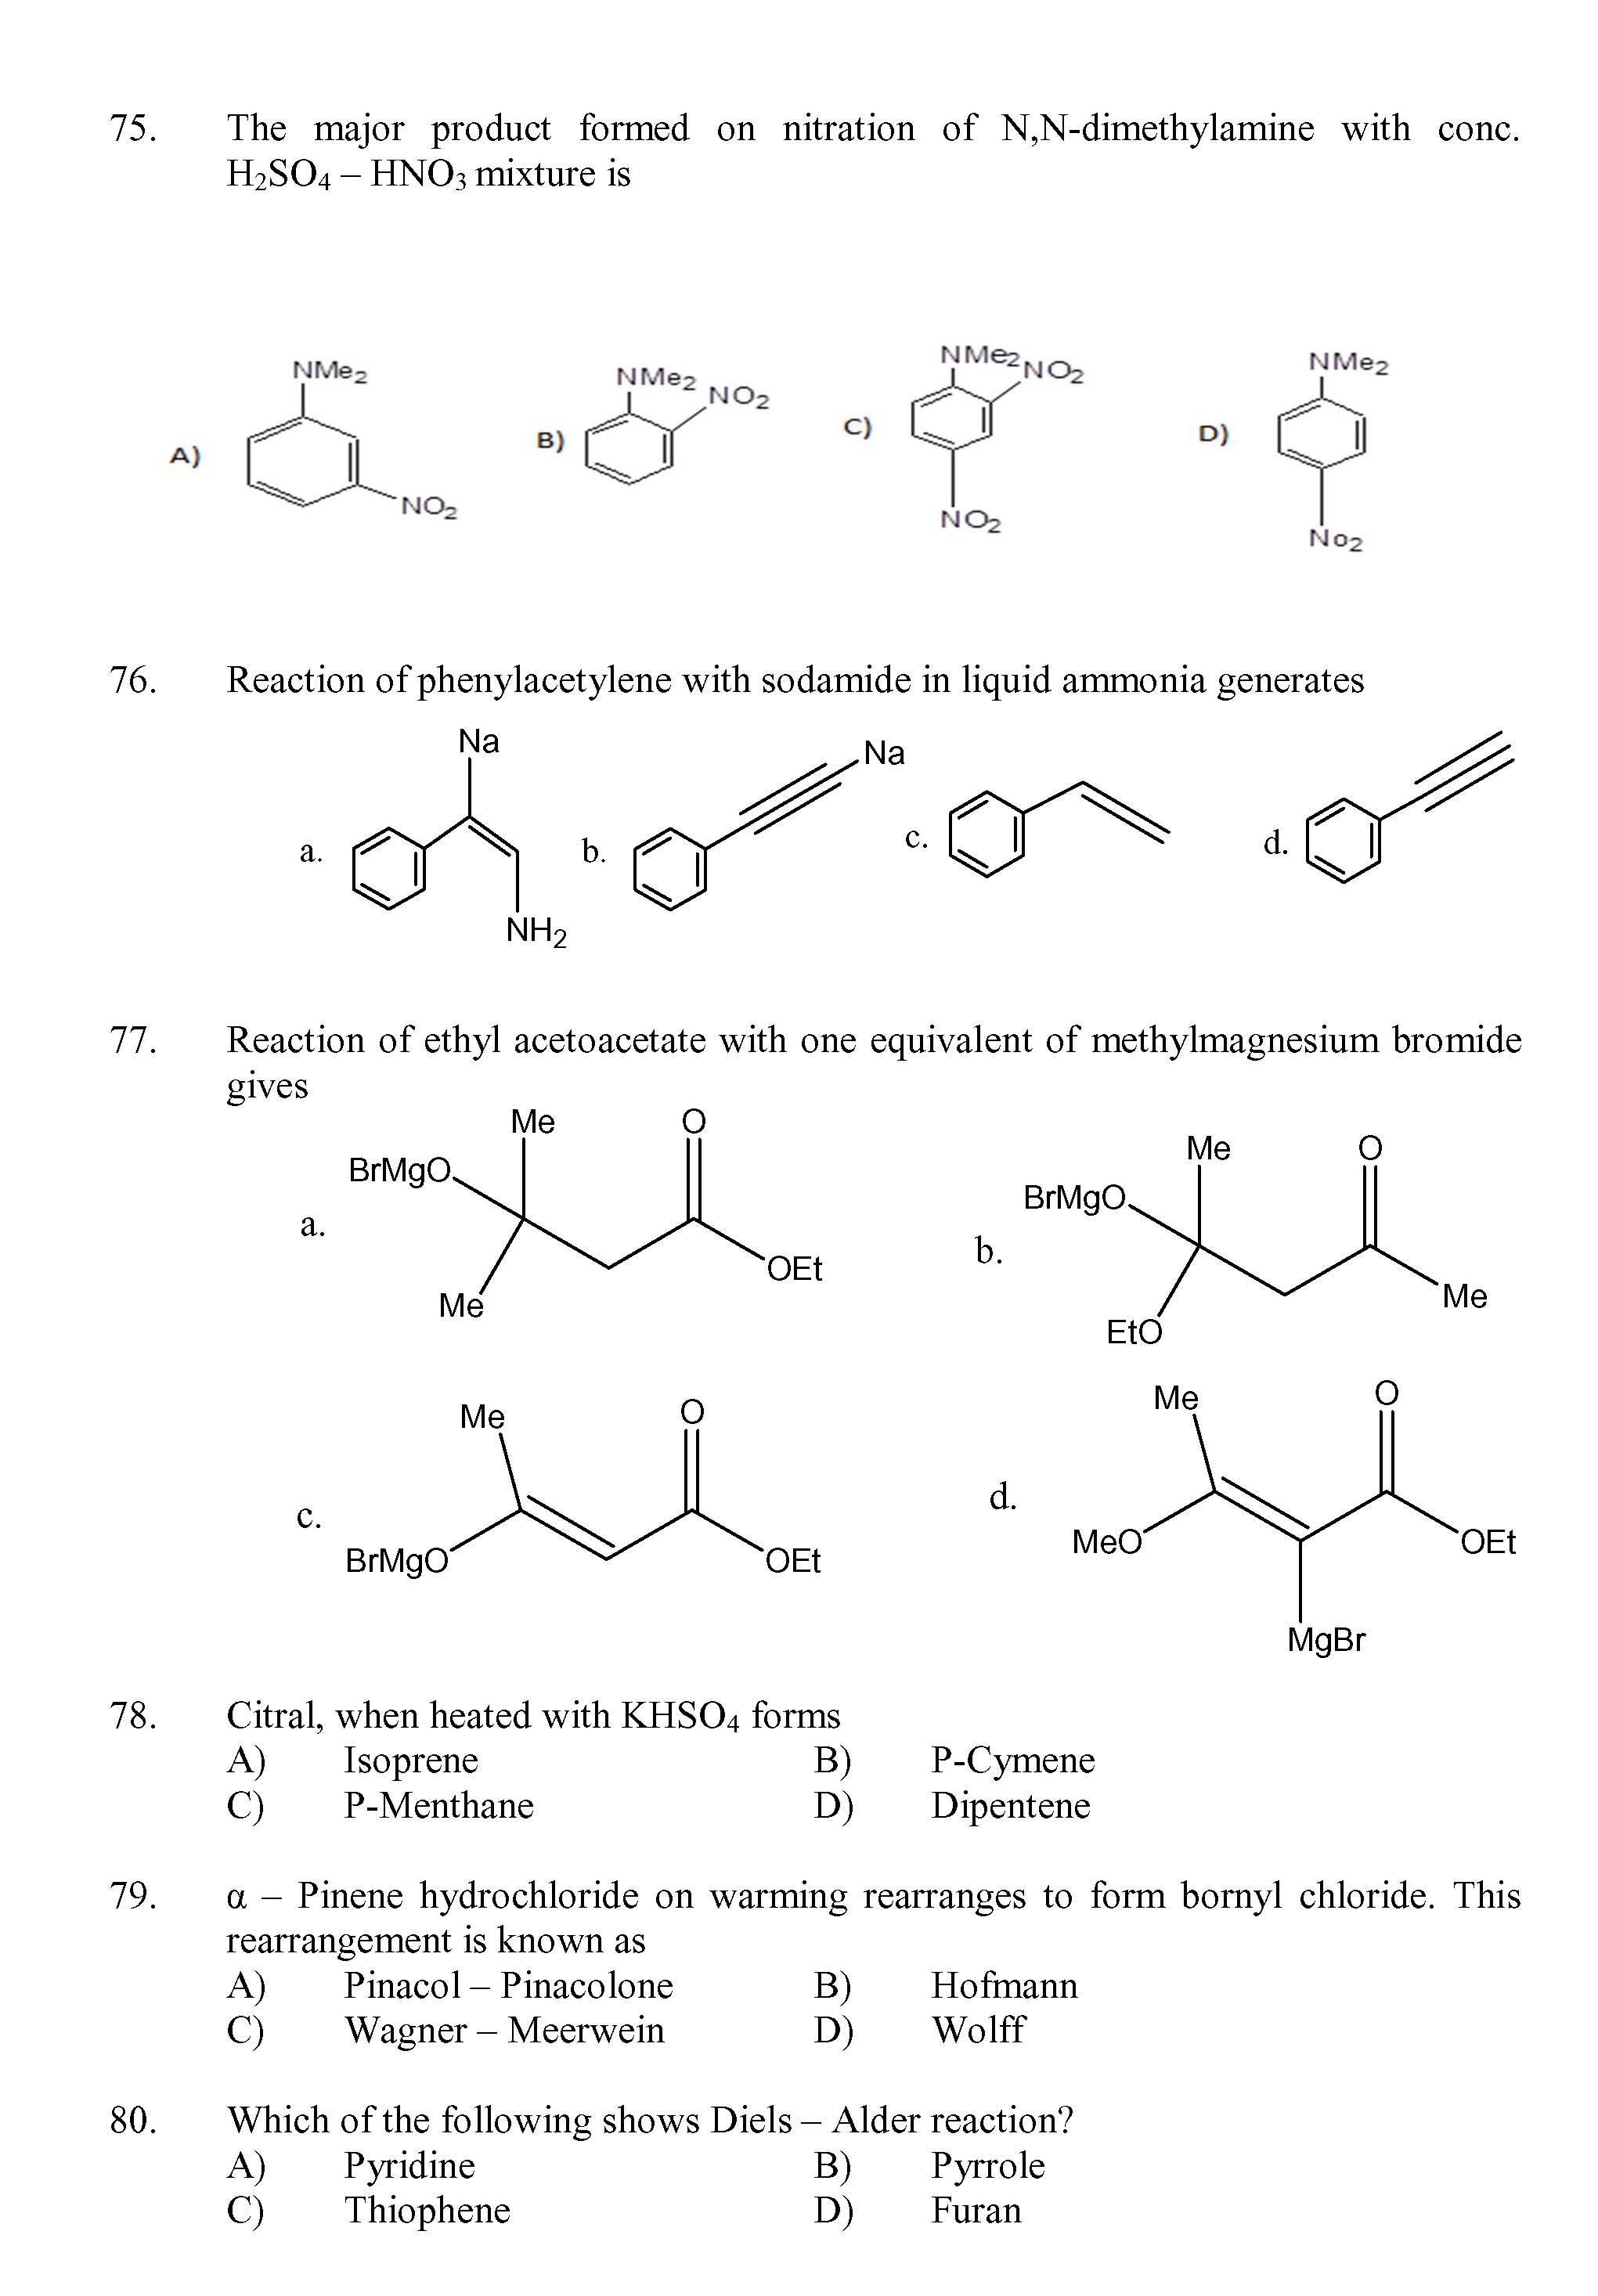 Kerala SET Chemistry Exam 2013 Question Code 13604 9